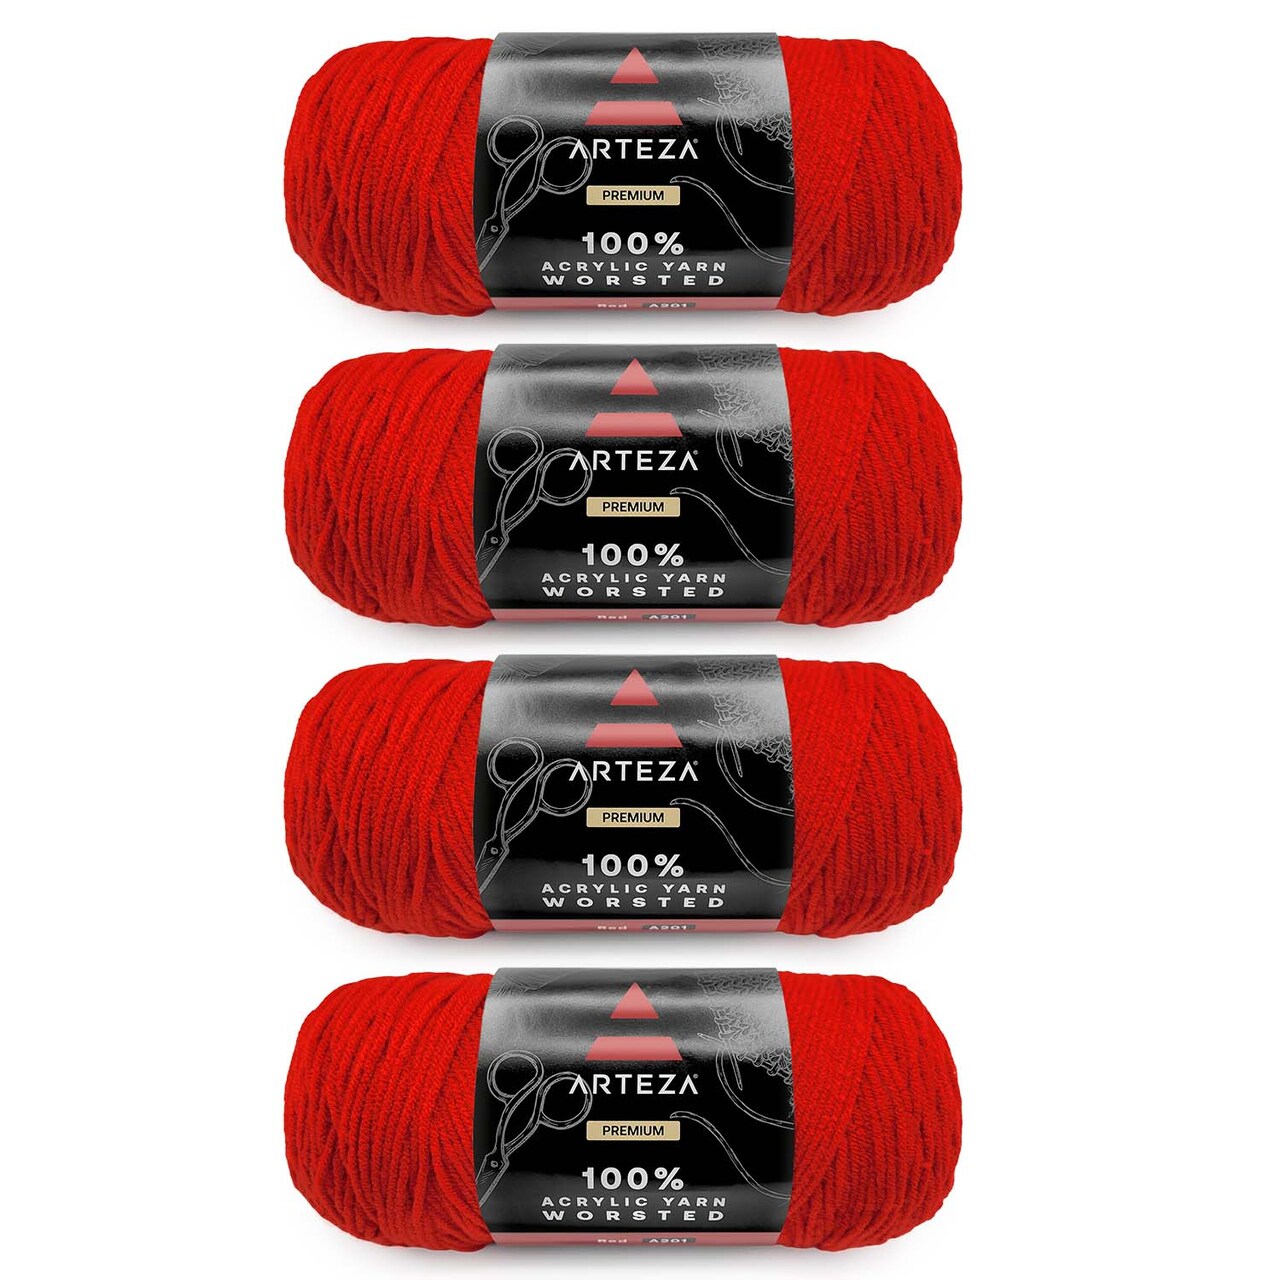 Arteza 100% Worsted Acrylic Yarn 4-Pack, Red